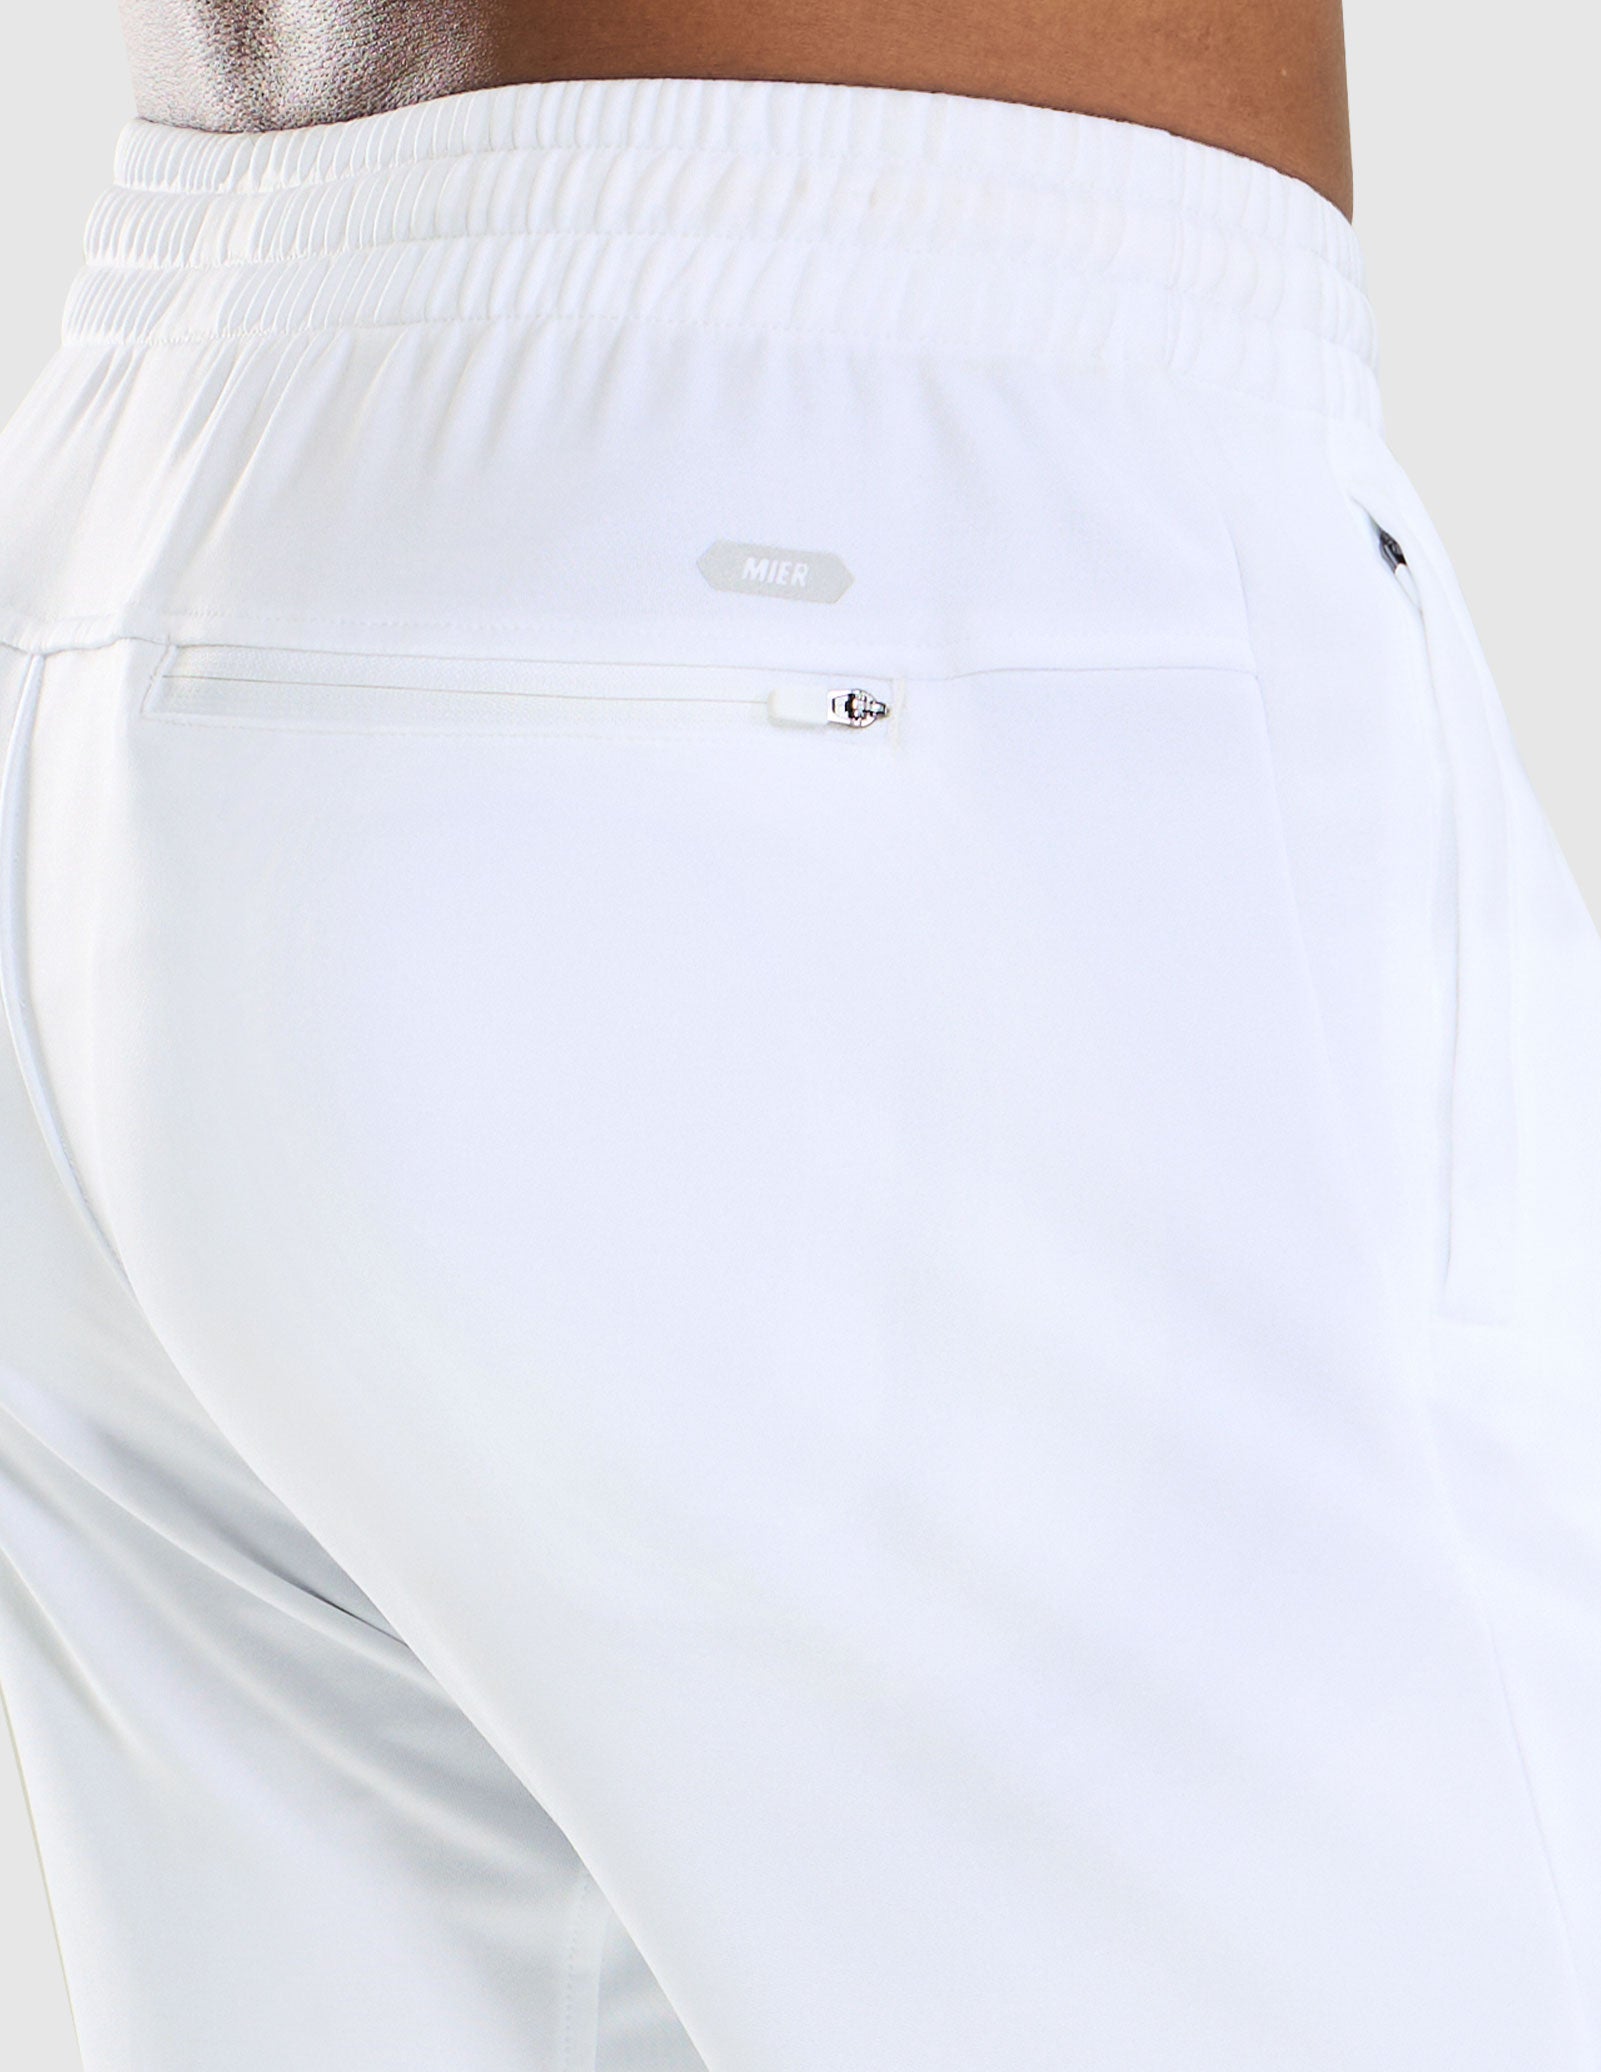 Men's Sweatpants Joggers Athletic Track Pants with Zipper Pockets